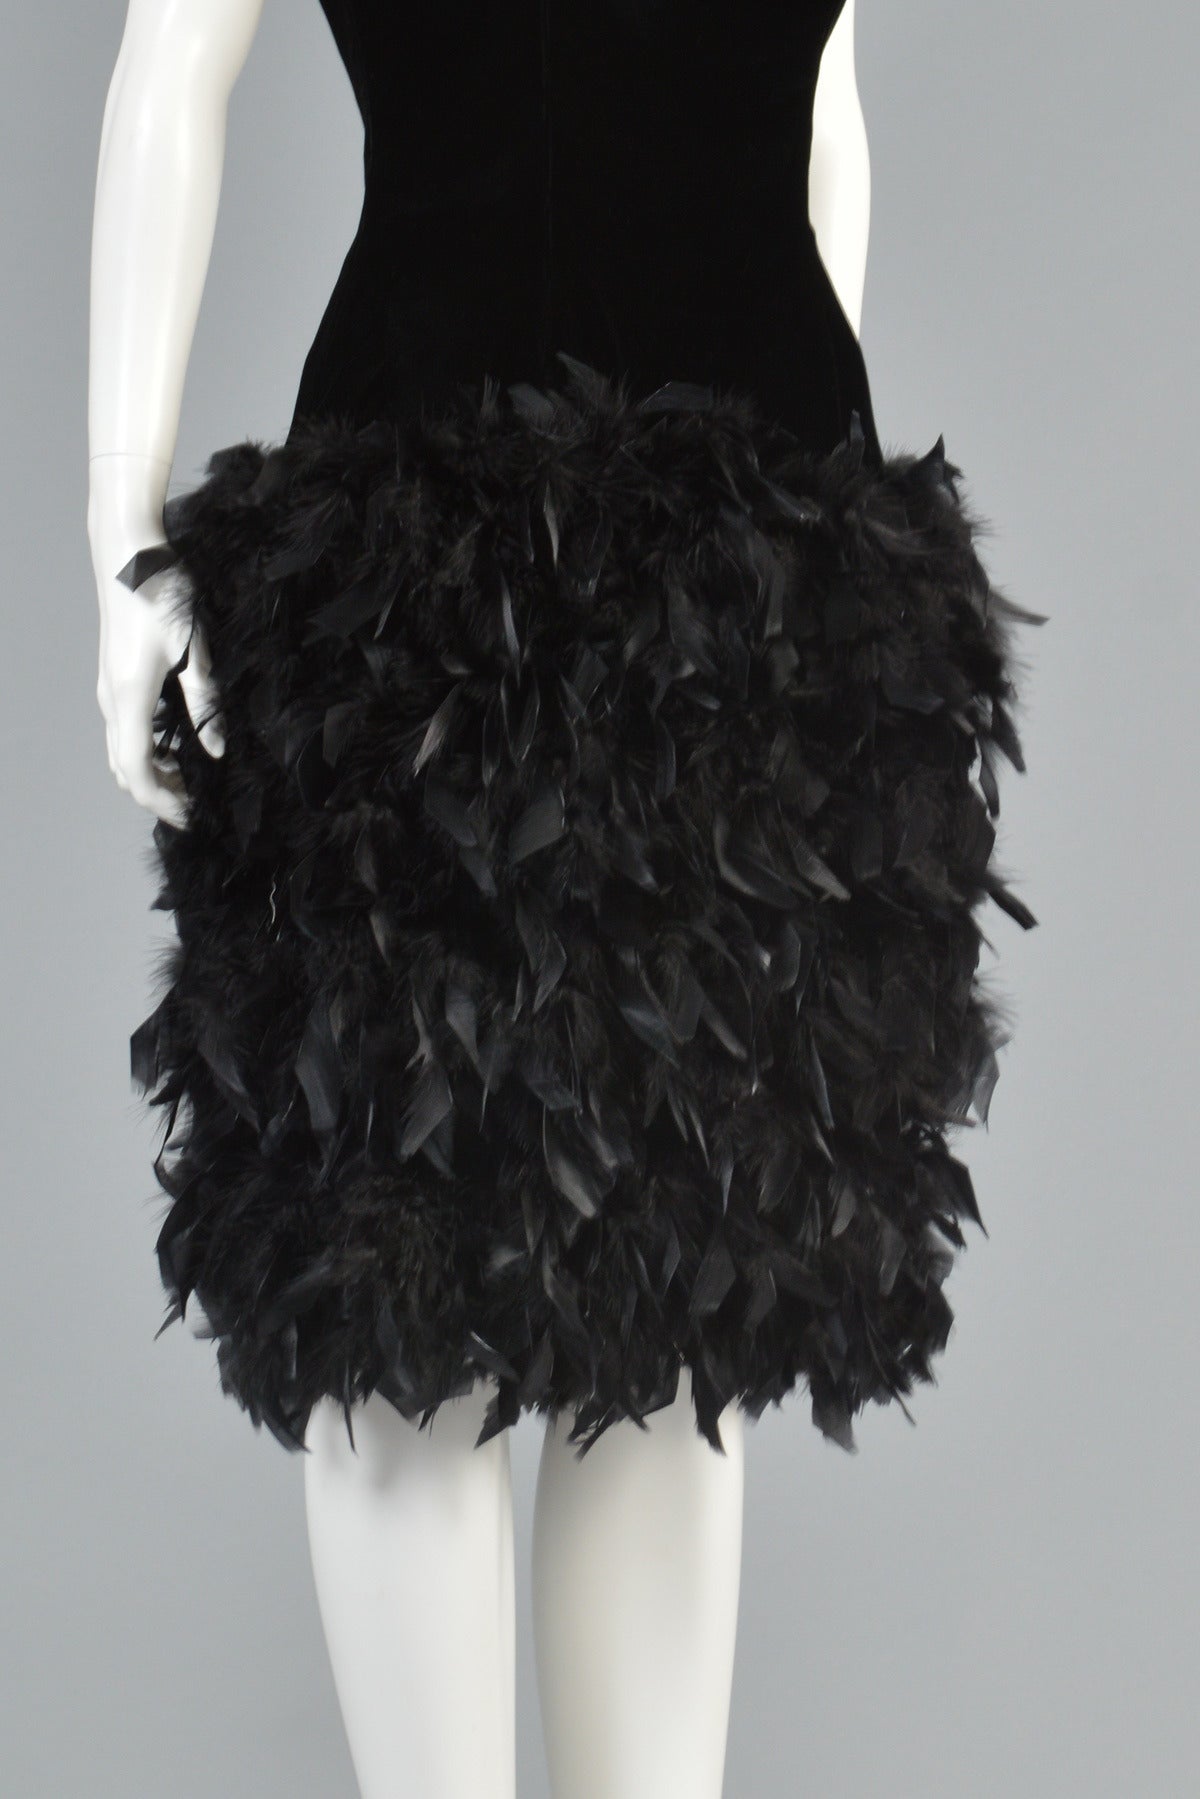 Black Velvet Cocktail Dress with Feathered Skirt For Sale 4